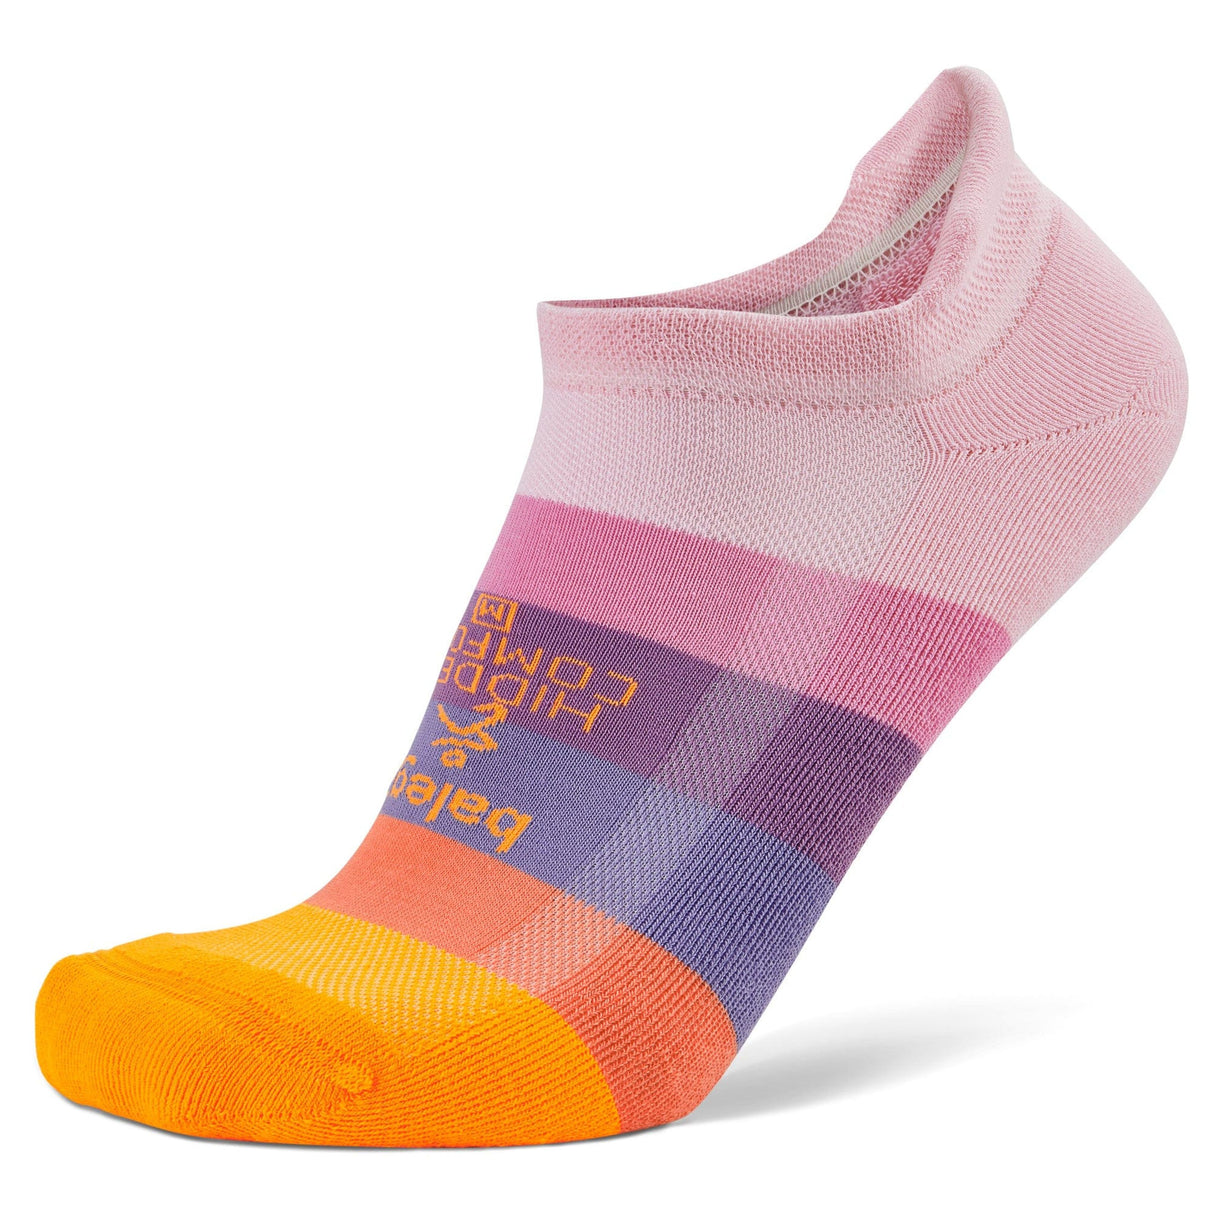 Balega Hidden Comfort No Show Tab Socks  -  Small / Candy Floss/Apricot / Single